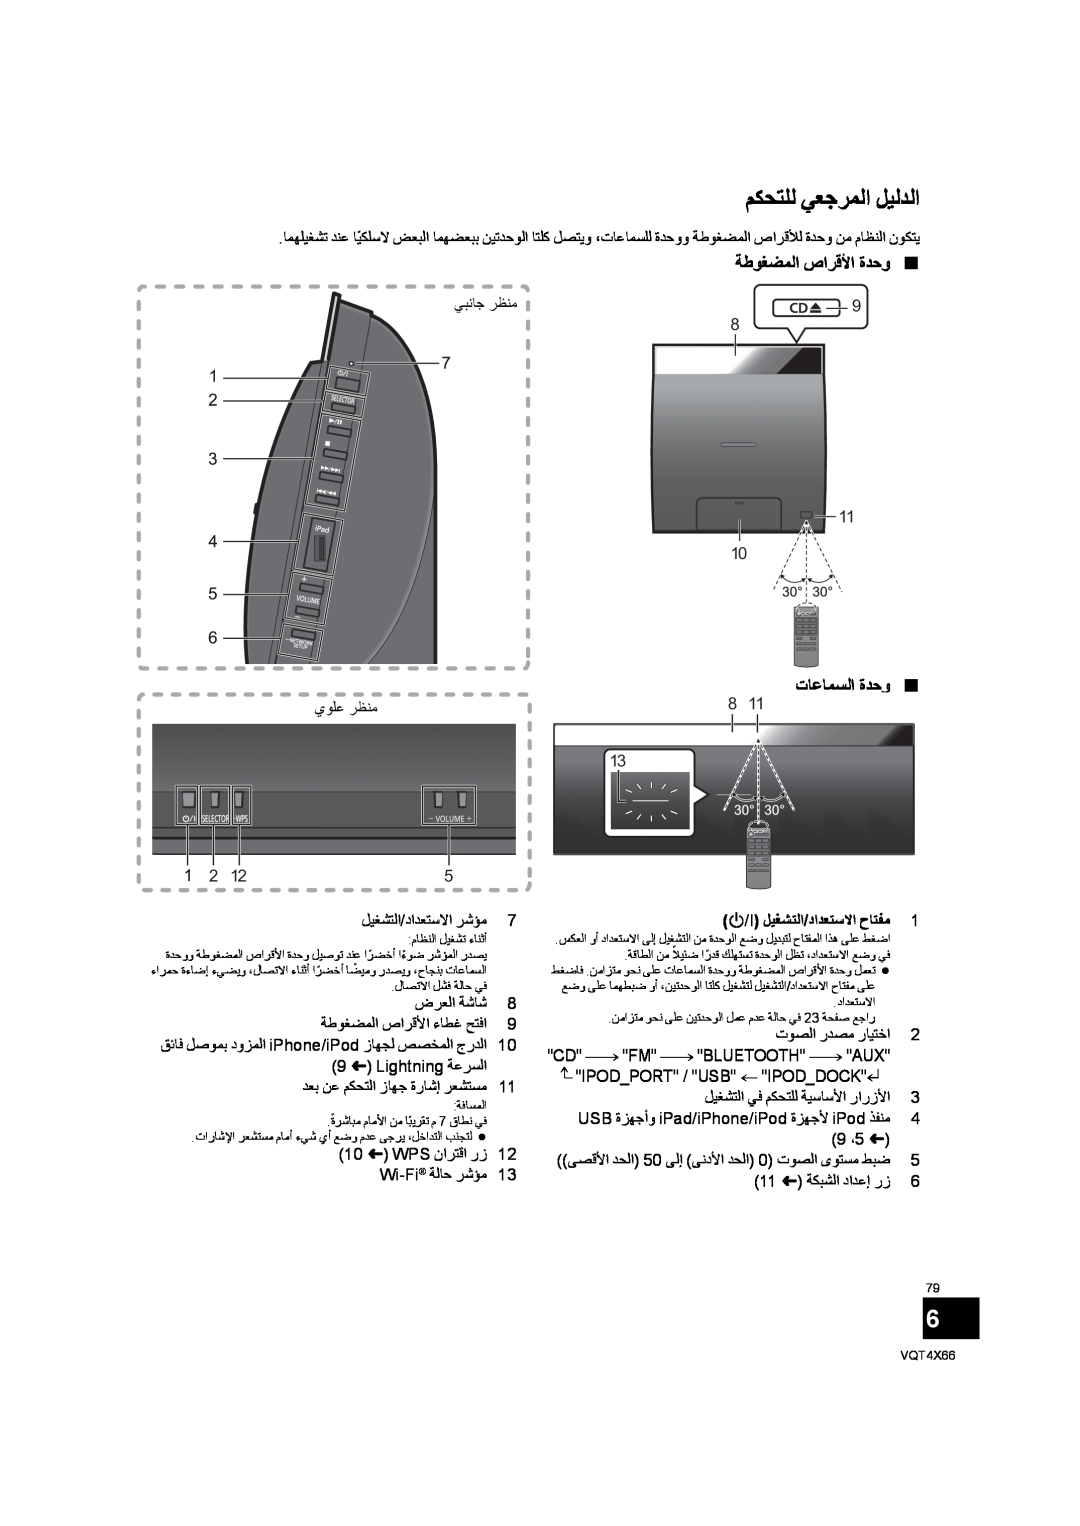 Panasonic SC-NE5 installation instructions ﻢﻜﺤﺘﻠﻟ ﻲﻌﺟﺮﻤﻟﺍ ﻞﻴﻟﺪﻟﺍ, ﺔﻃﻮﻐﻀﻤﻟﺍ ﺹﺍﺮﻗﻷﺍ ﺓﺪﺣﻭ , ﺕﺎﻋﺎﻤﺴﻟﺍ ﺓﺪﺣﻭ  